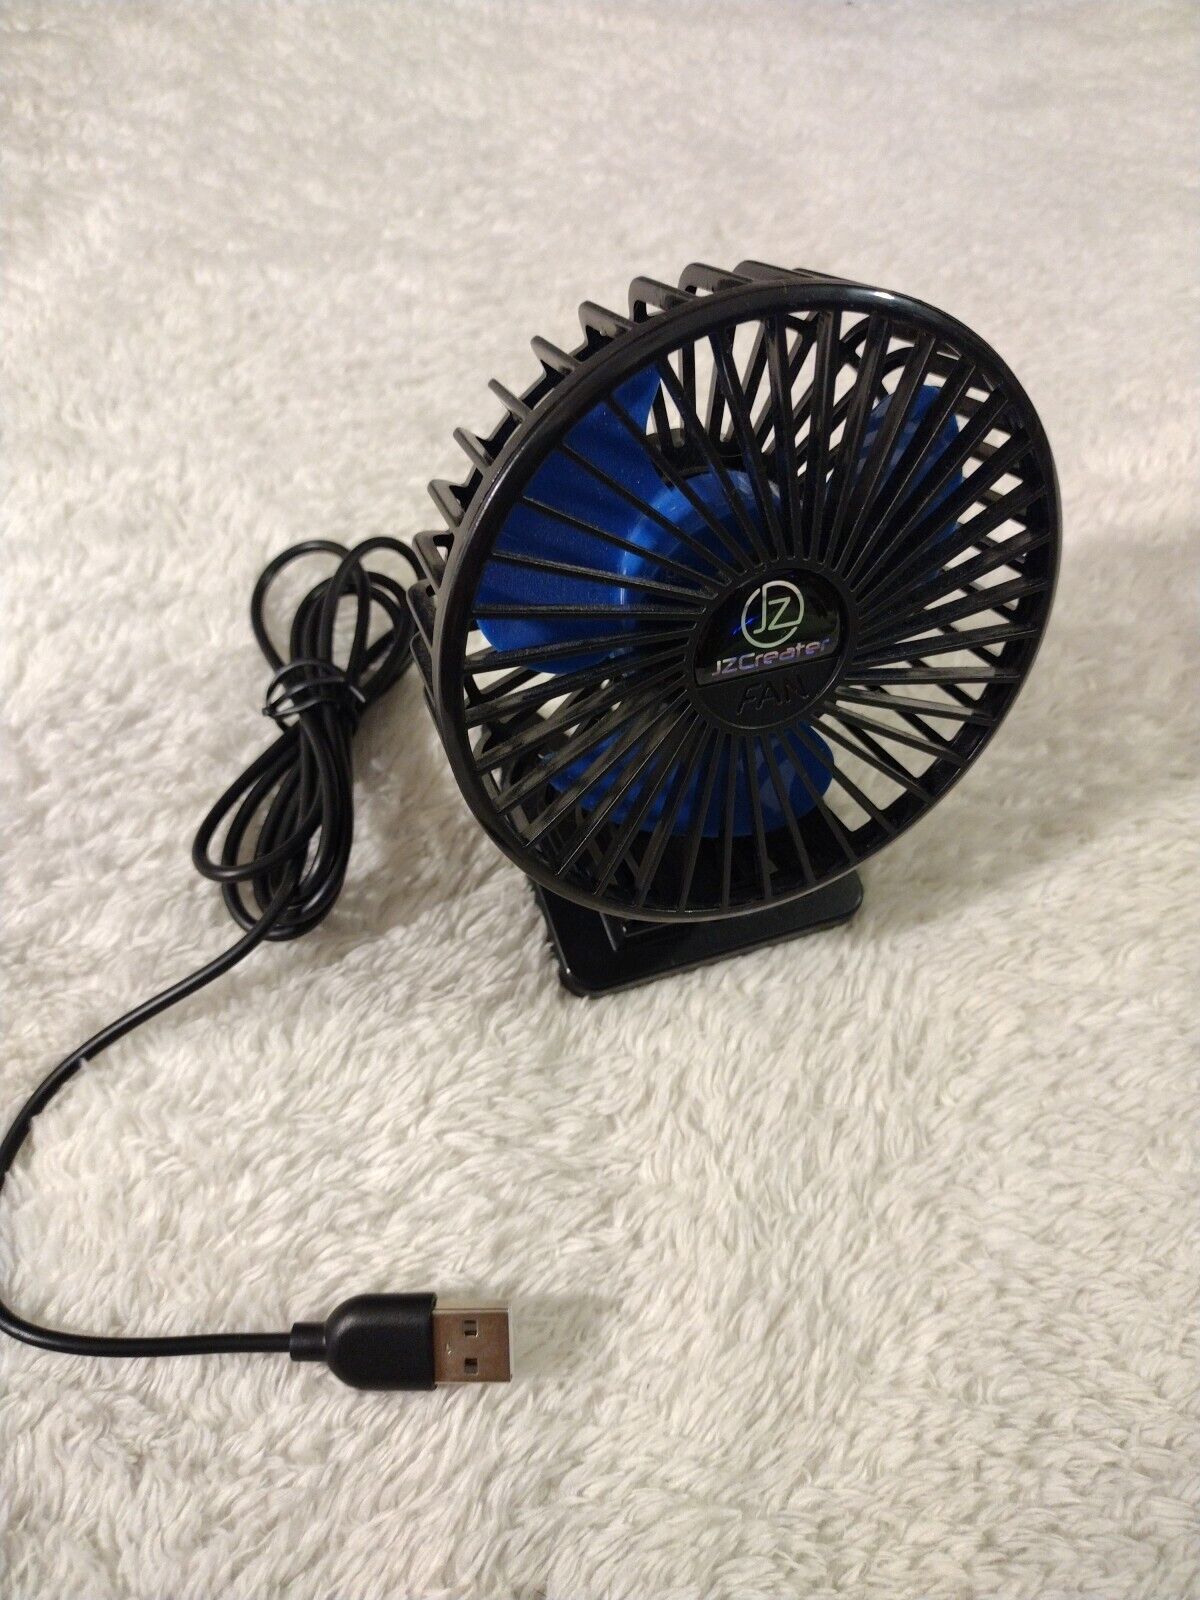 120mm Mini USB Cooling Fan Silent Air Cooler For PC Computer Desktop Portable